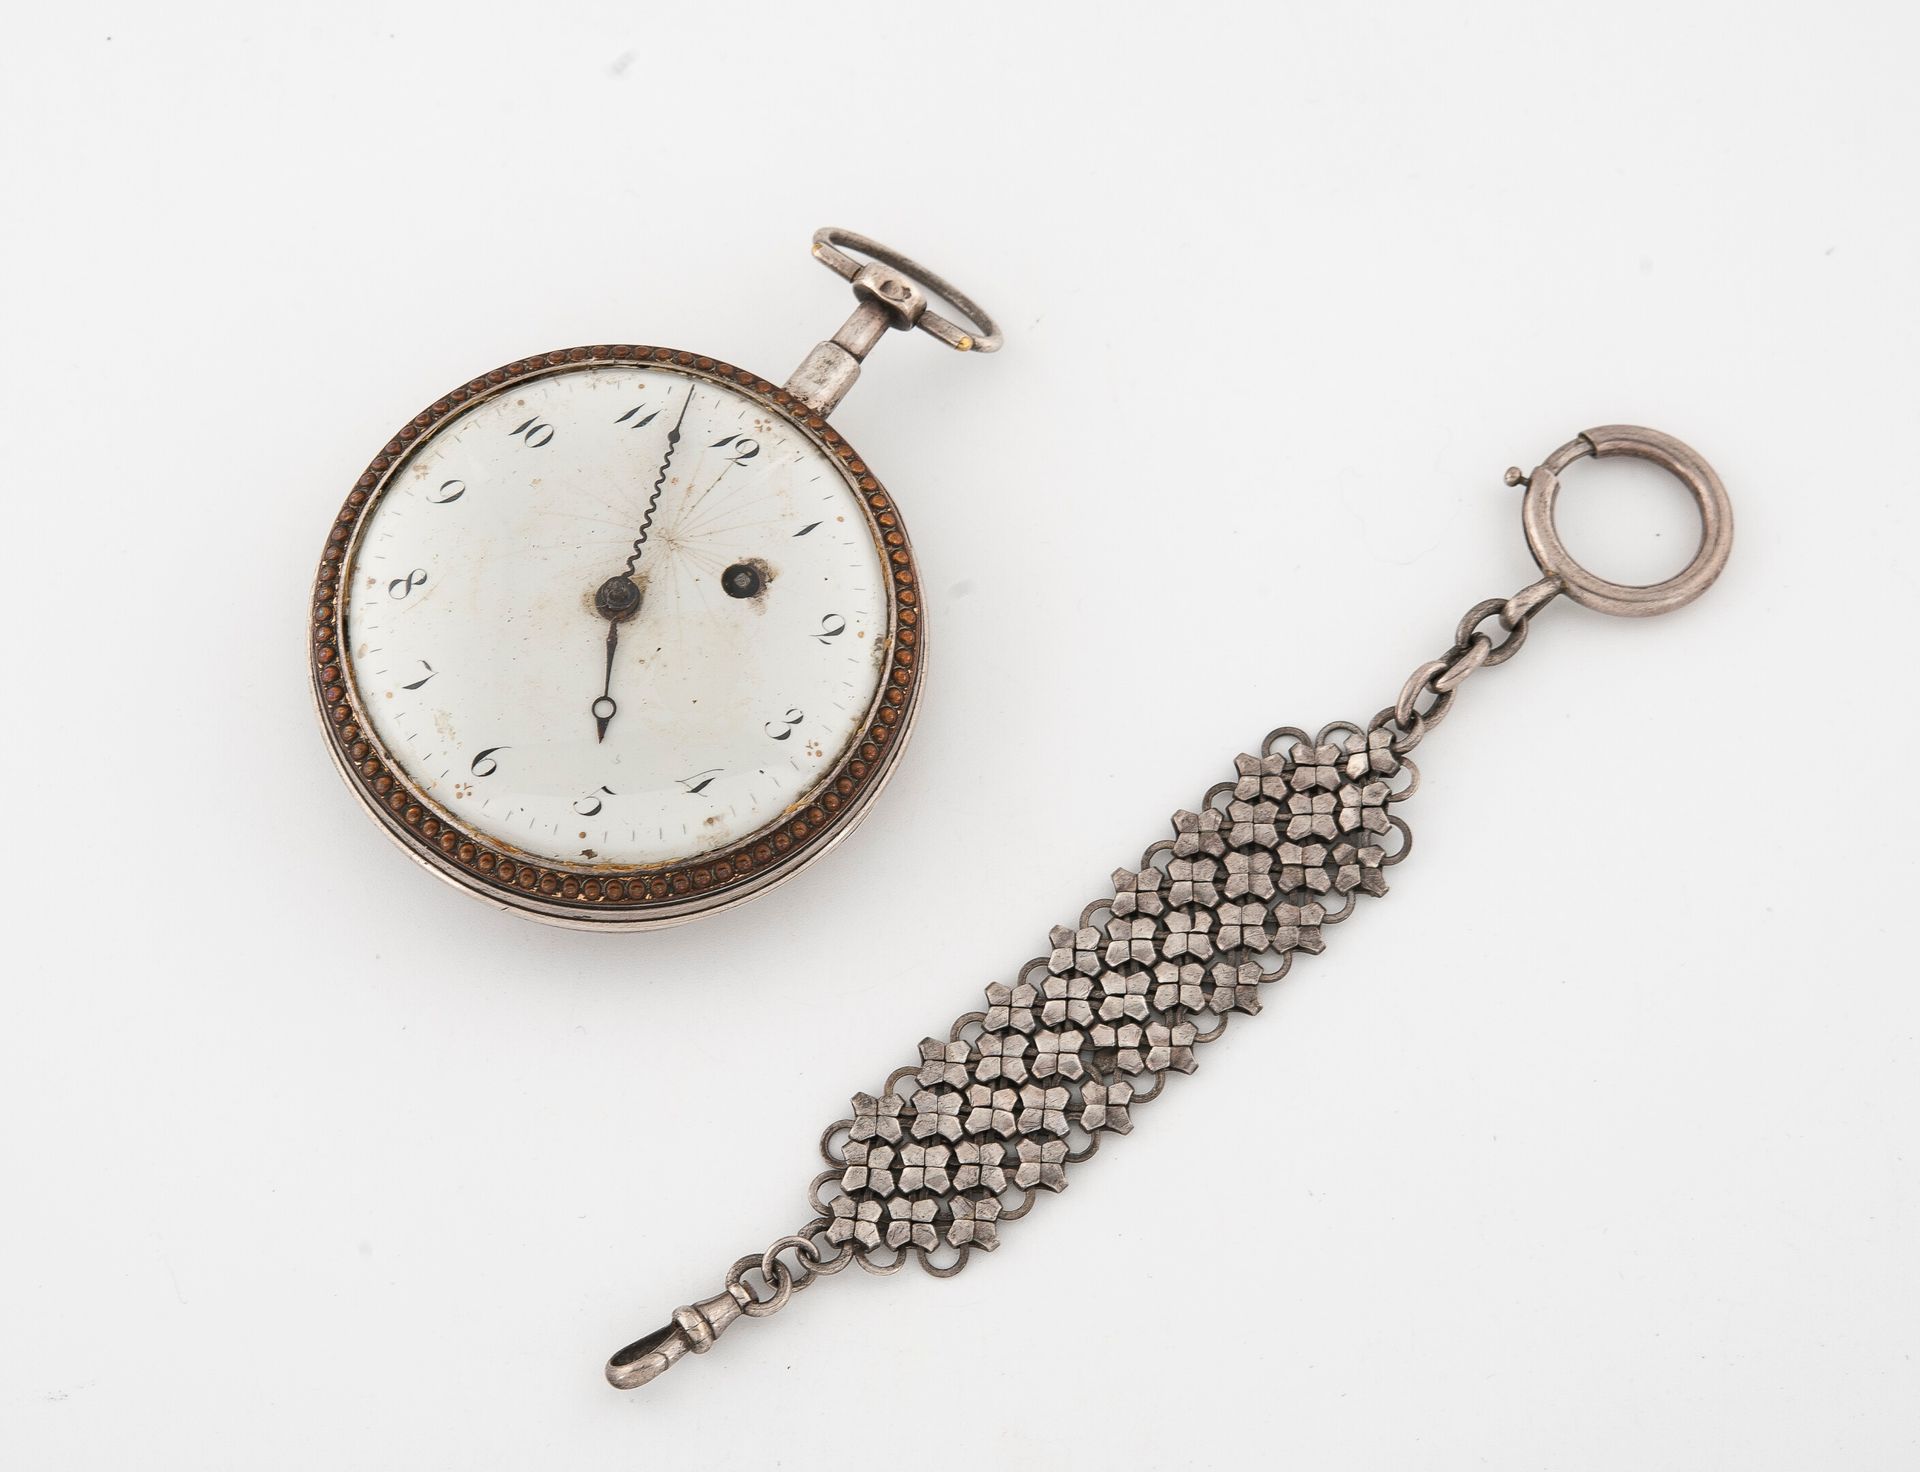 THIESSELI, à Etrepagny Reloj de bolsillo de plata (min.800)

Esfera esmaltada bl&hellip;